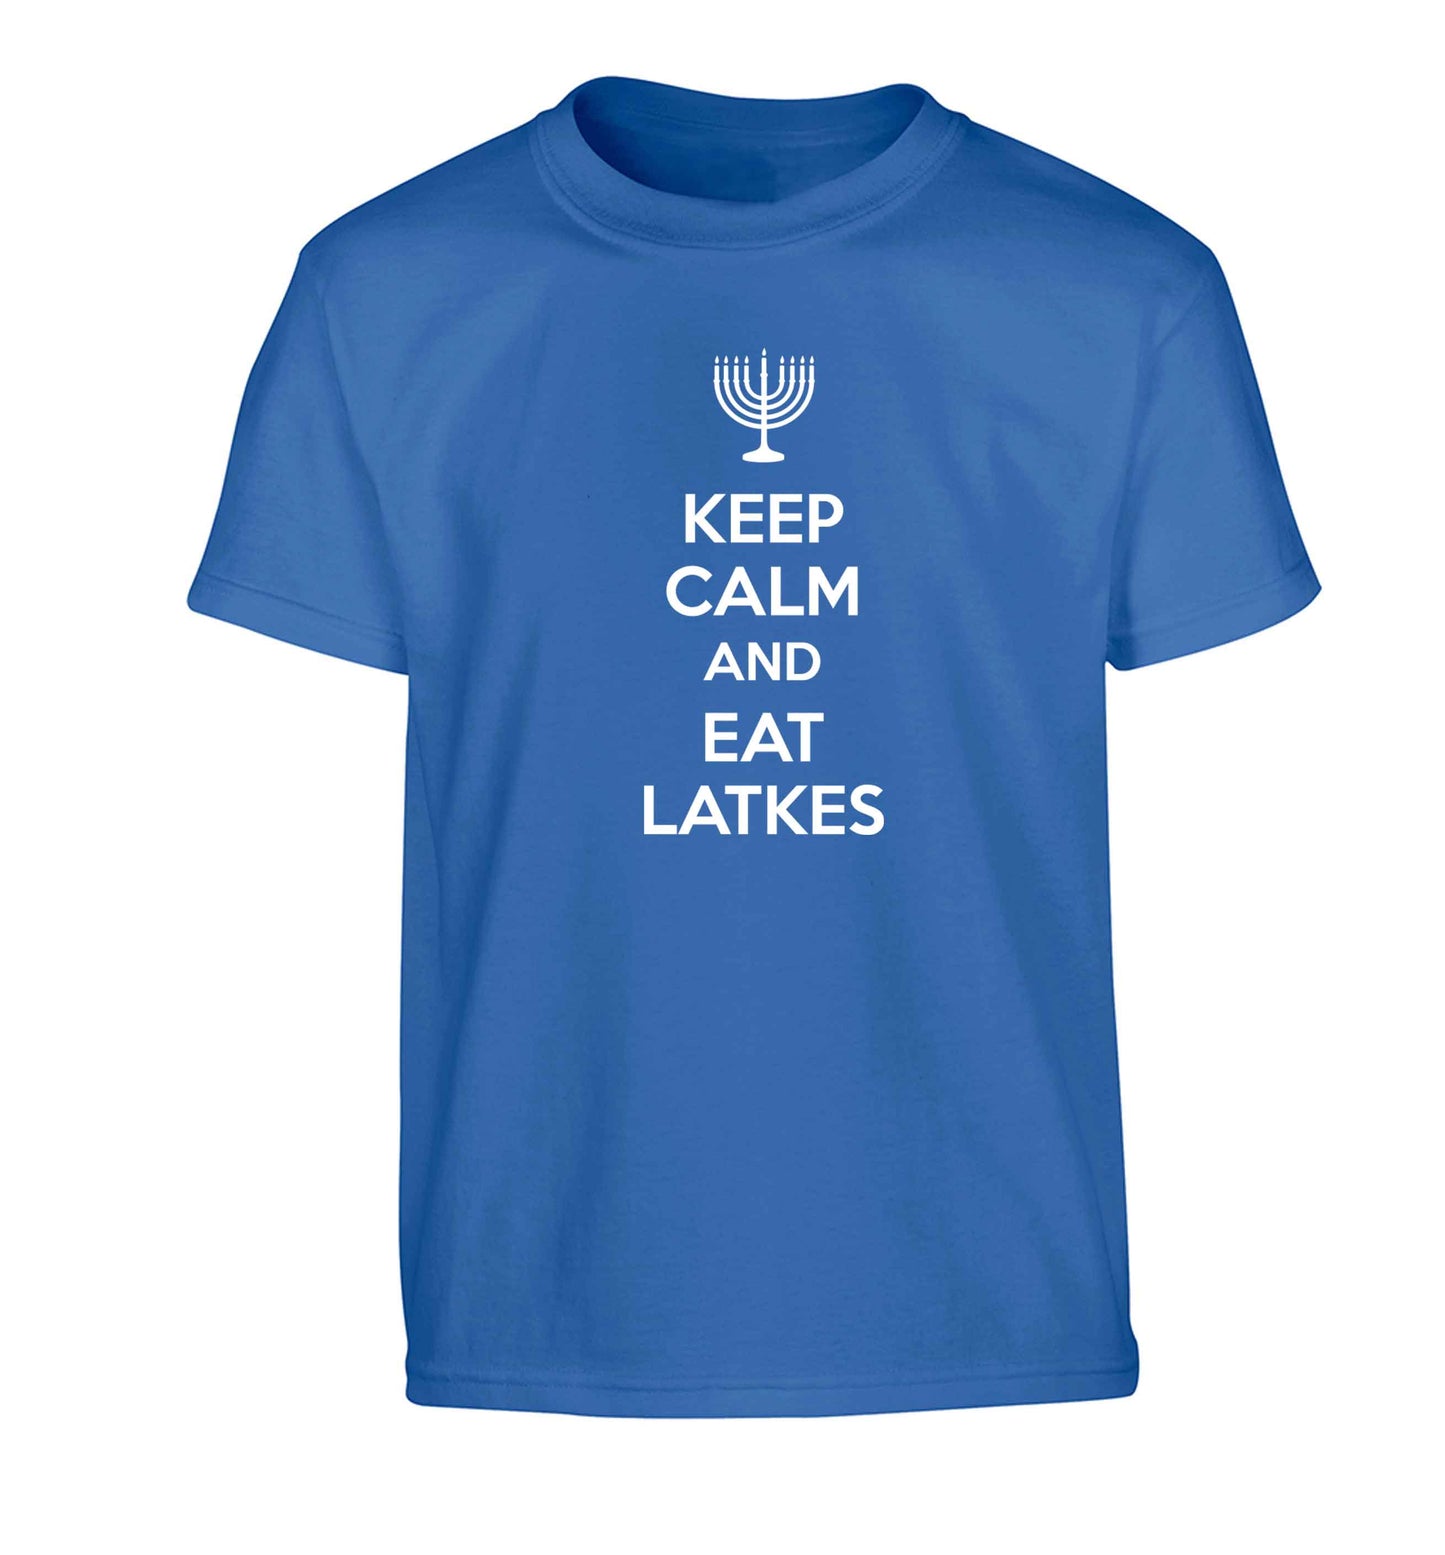 Keep calm and eat latkes Children's blue Tshirt 12-13 Years